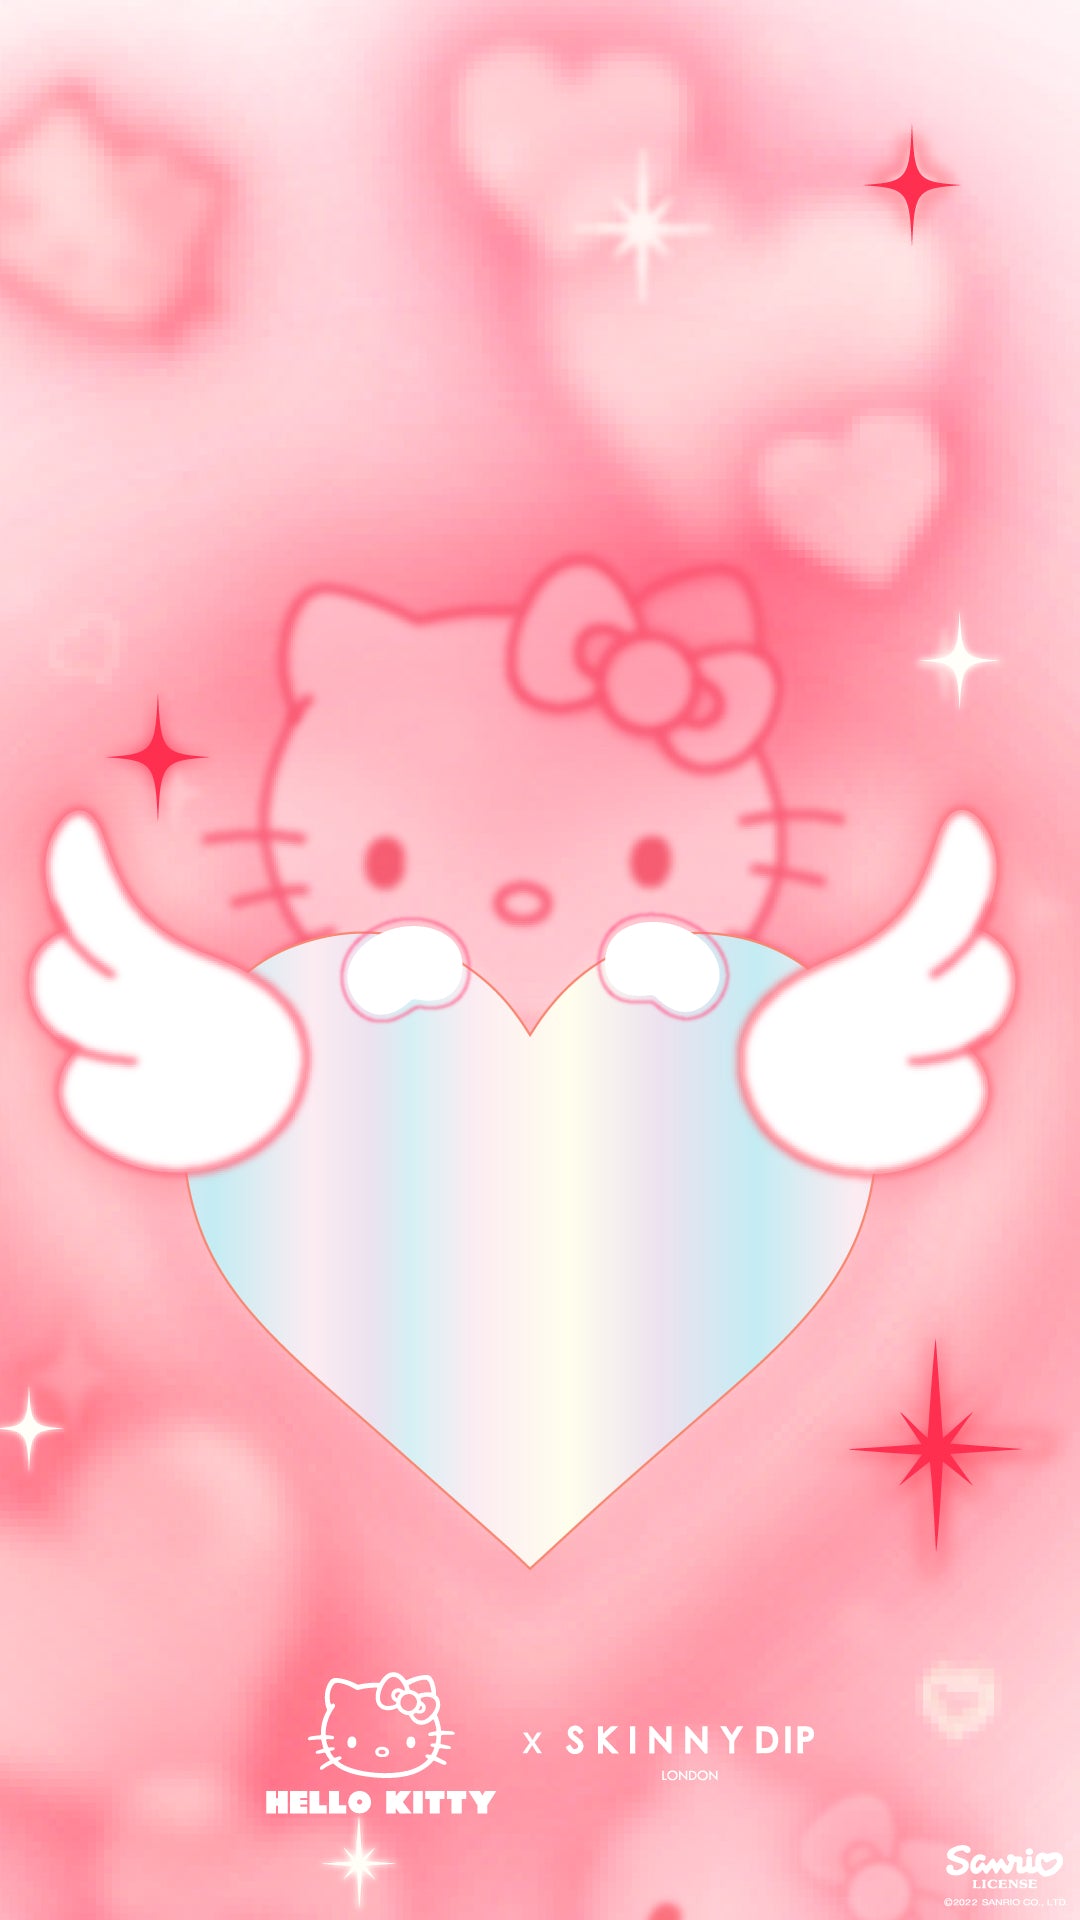 Hello Kitty x Skinnydip Drop 2 Phone Wallpaper 08